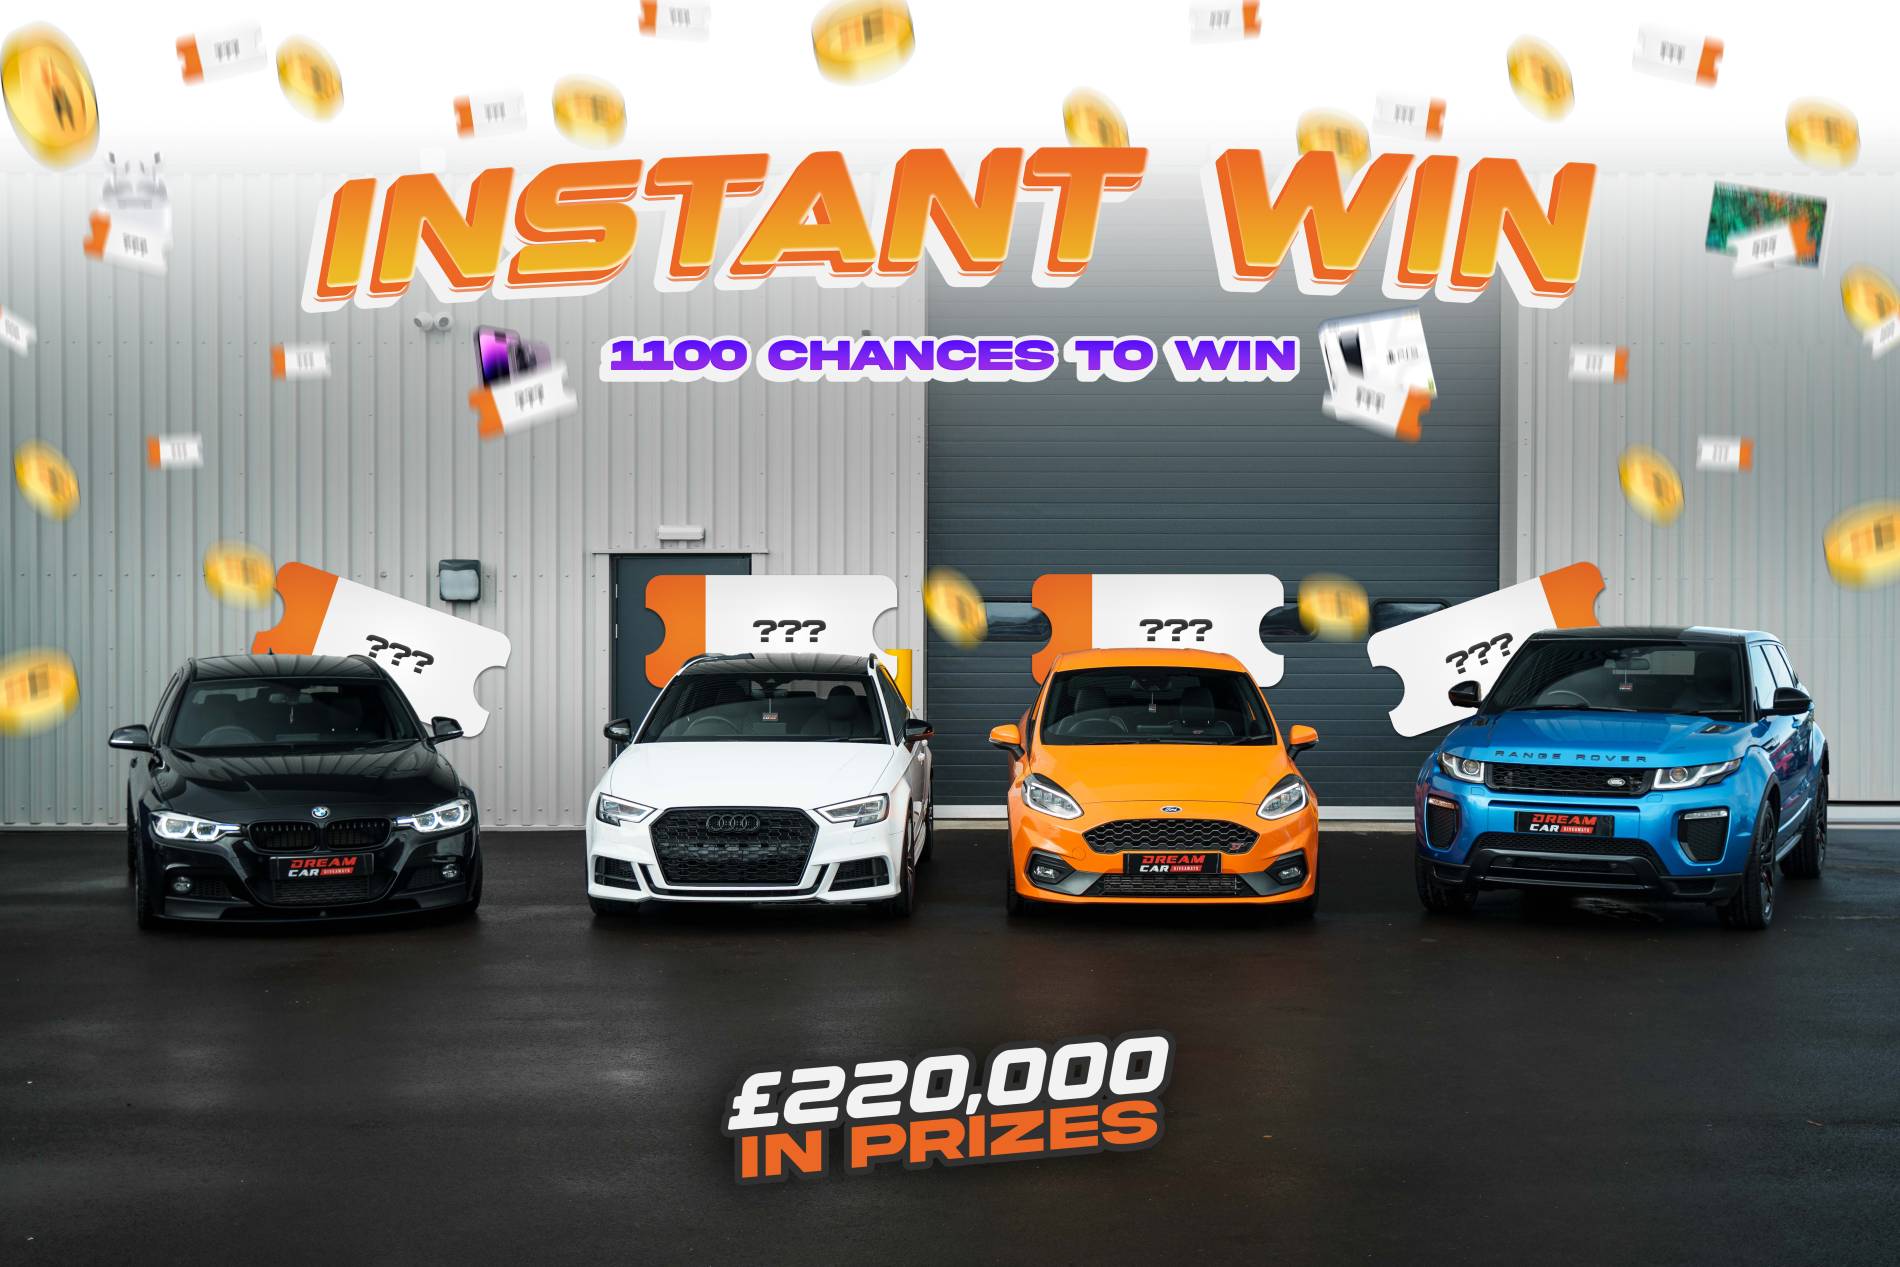 Win 1100 Instant Wins  / £220,000 Prize Pot - £10,000 End Prize!